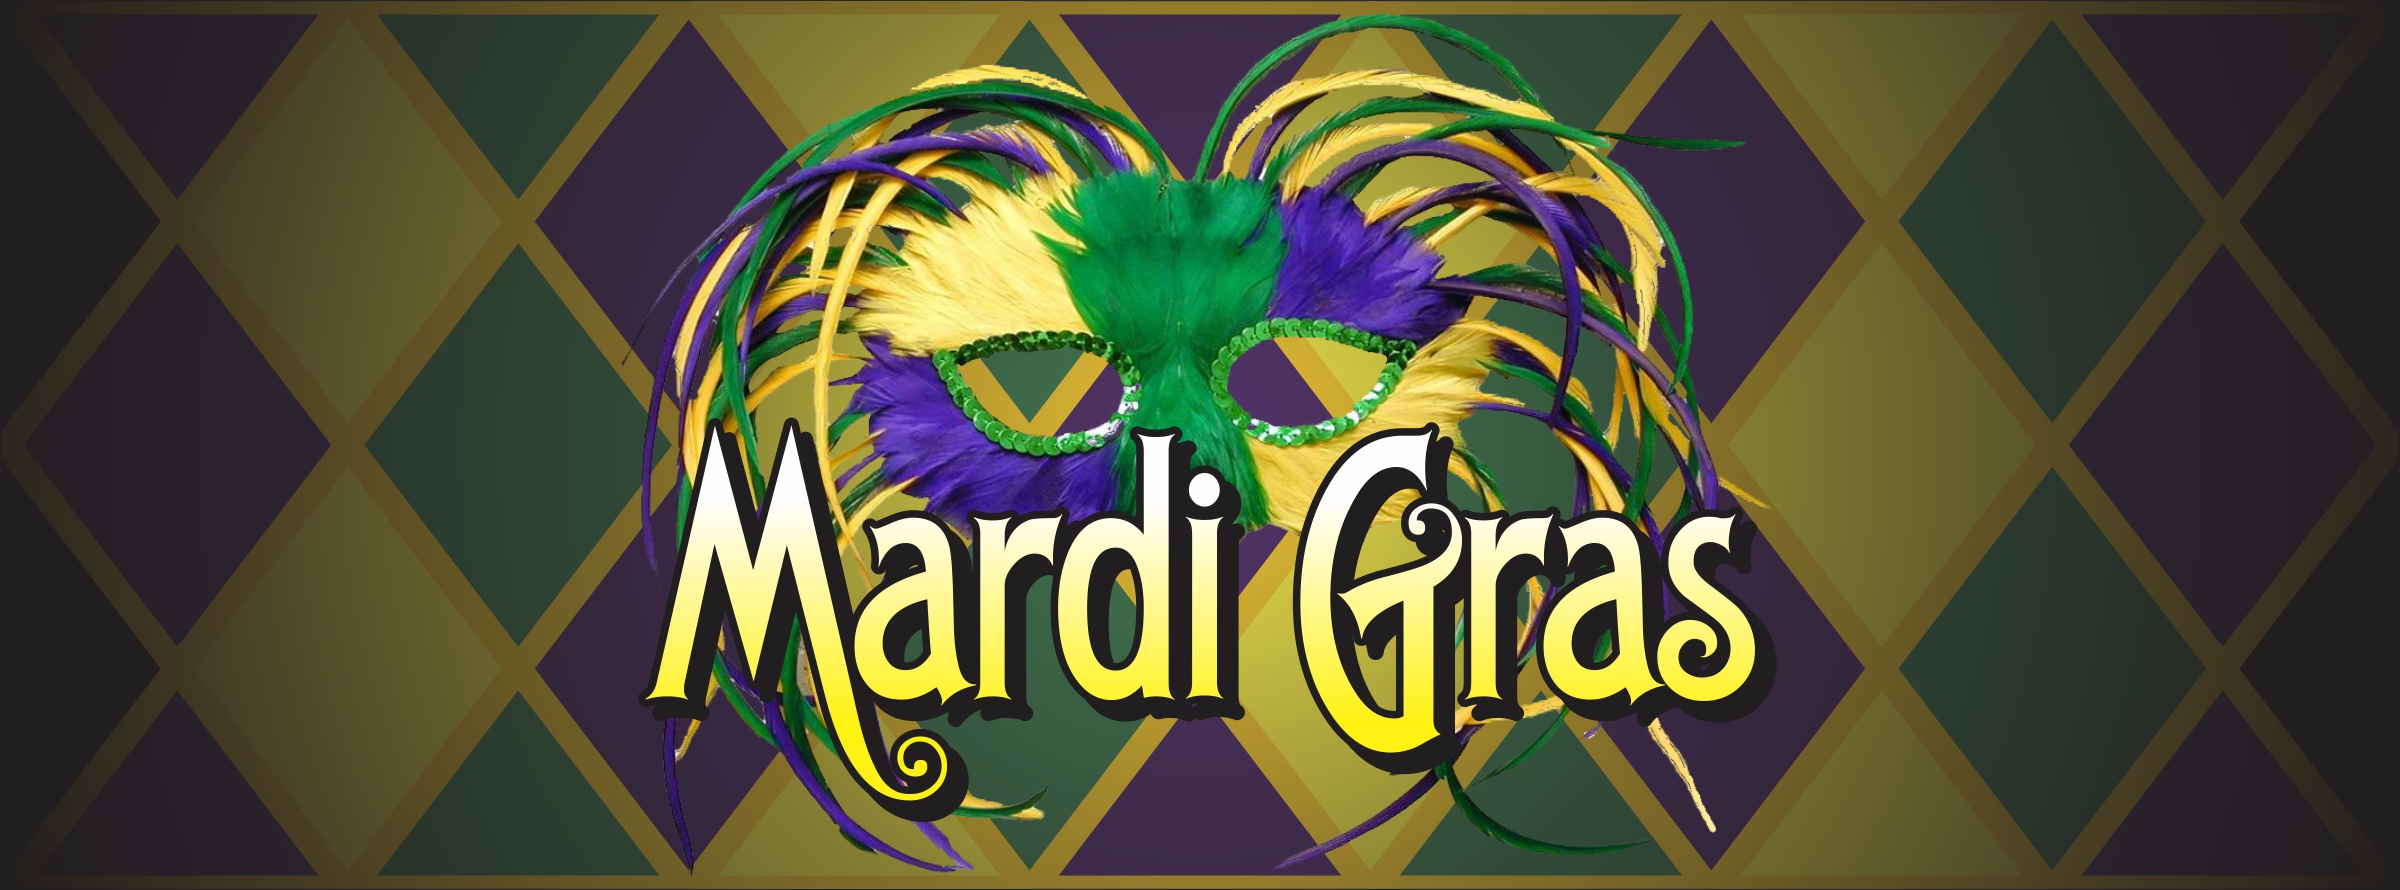 Mardi Gras Wallpaper Hd - HD Wallpaper 